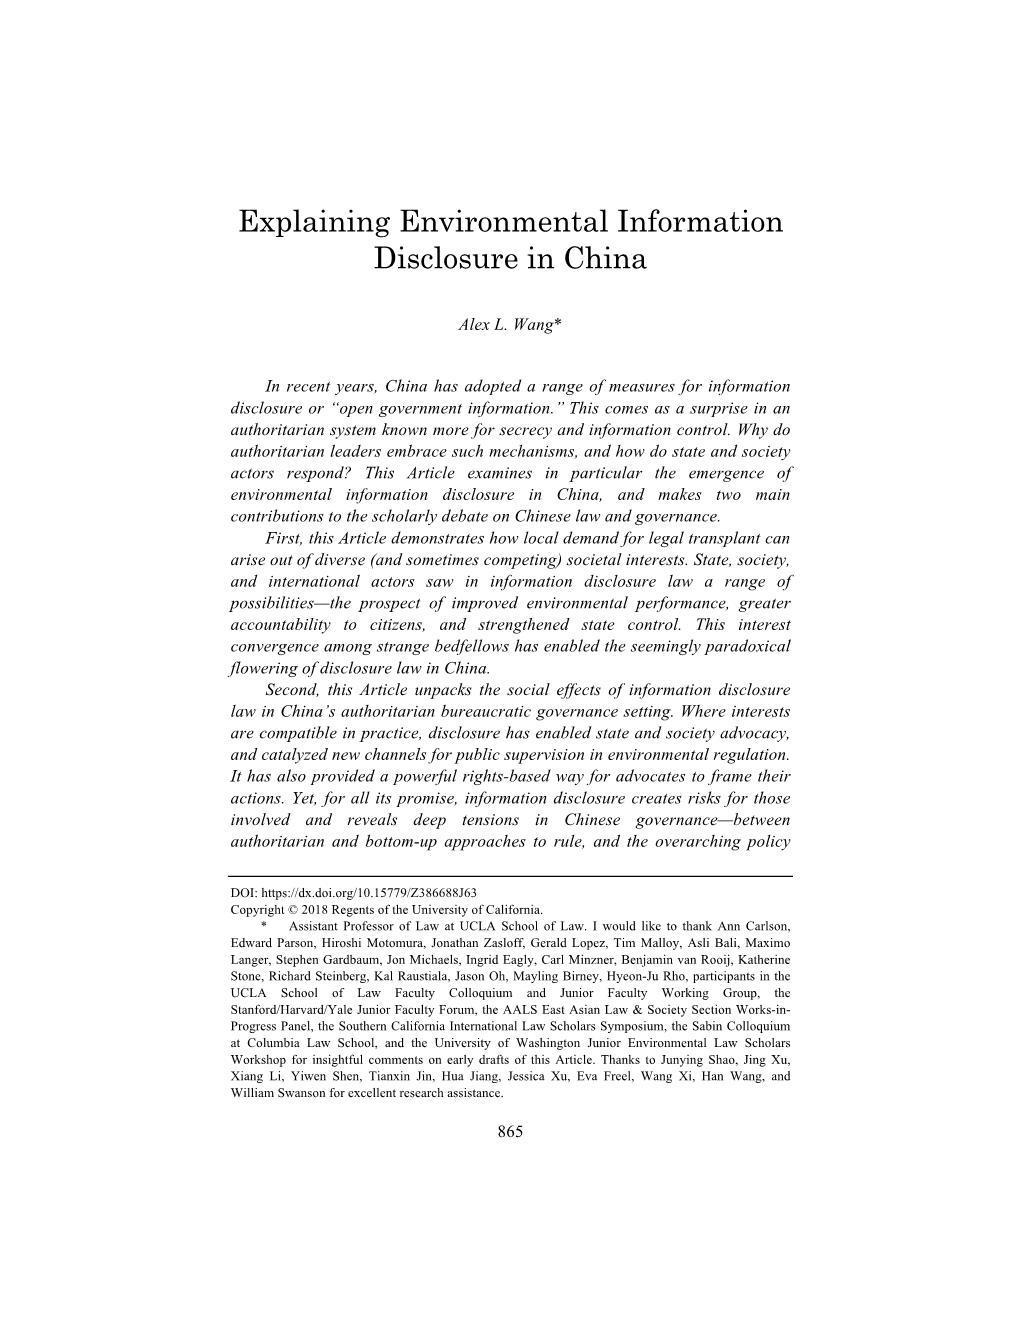 Explaining Environmental Information Disclosure in China